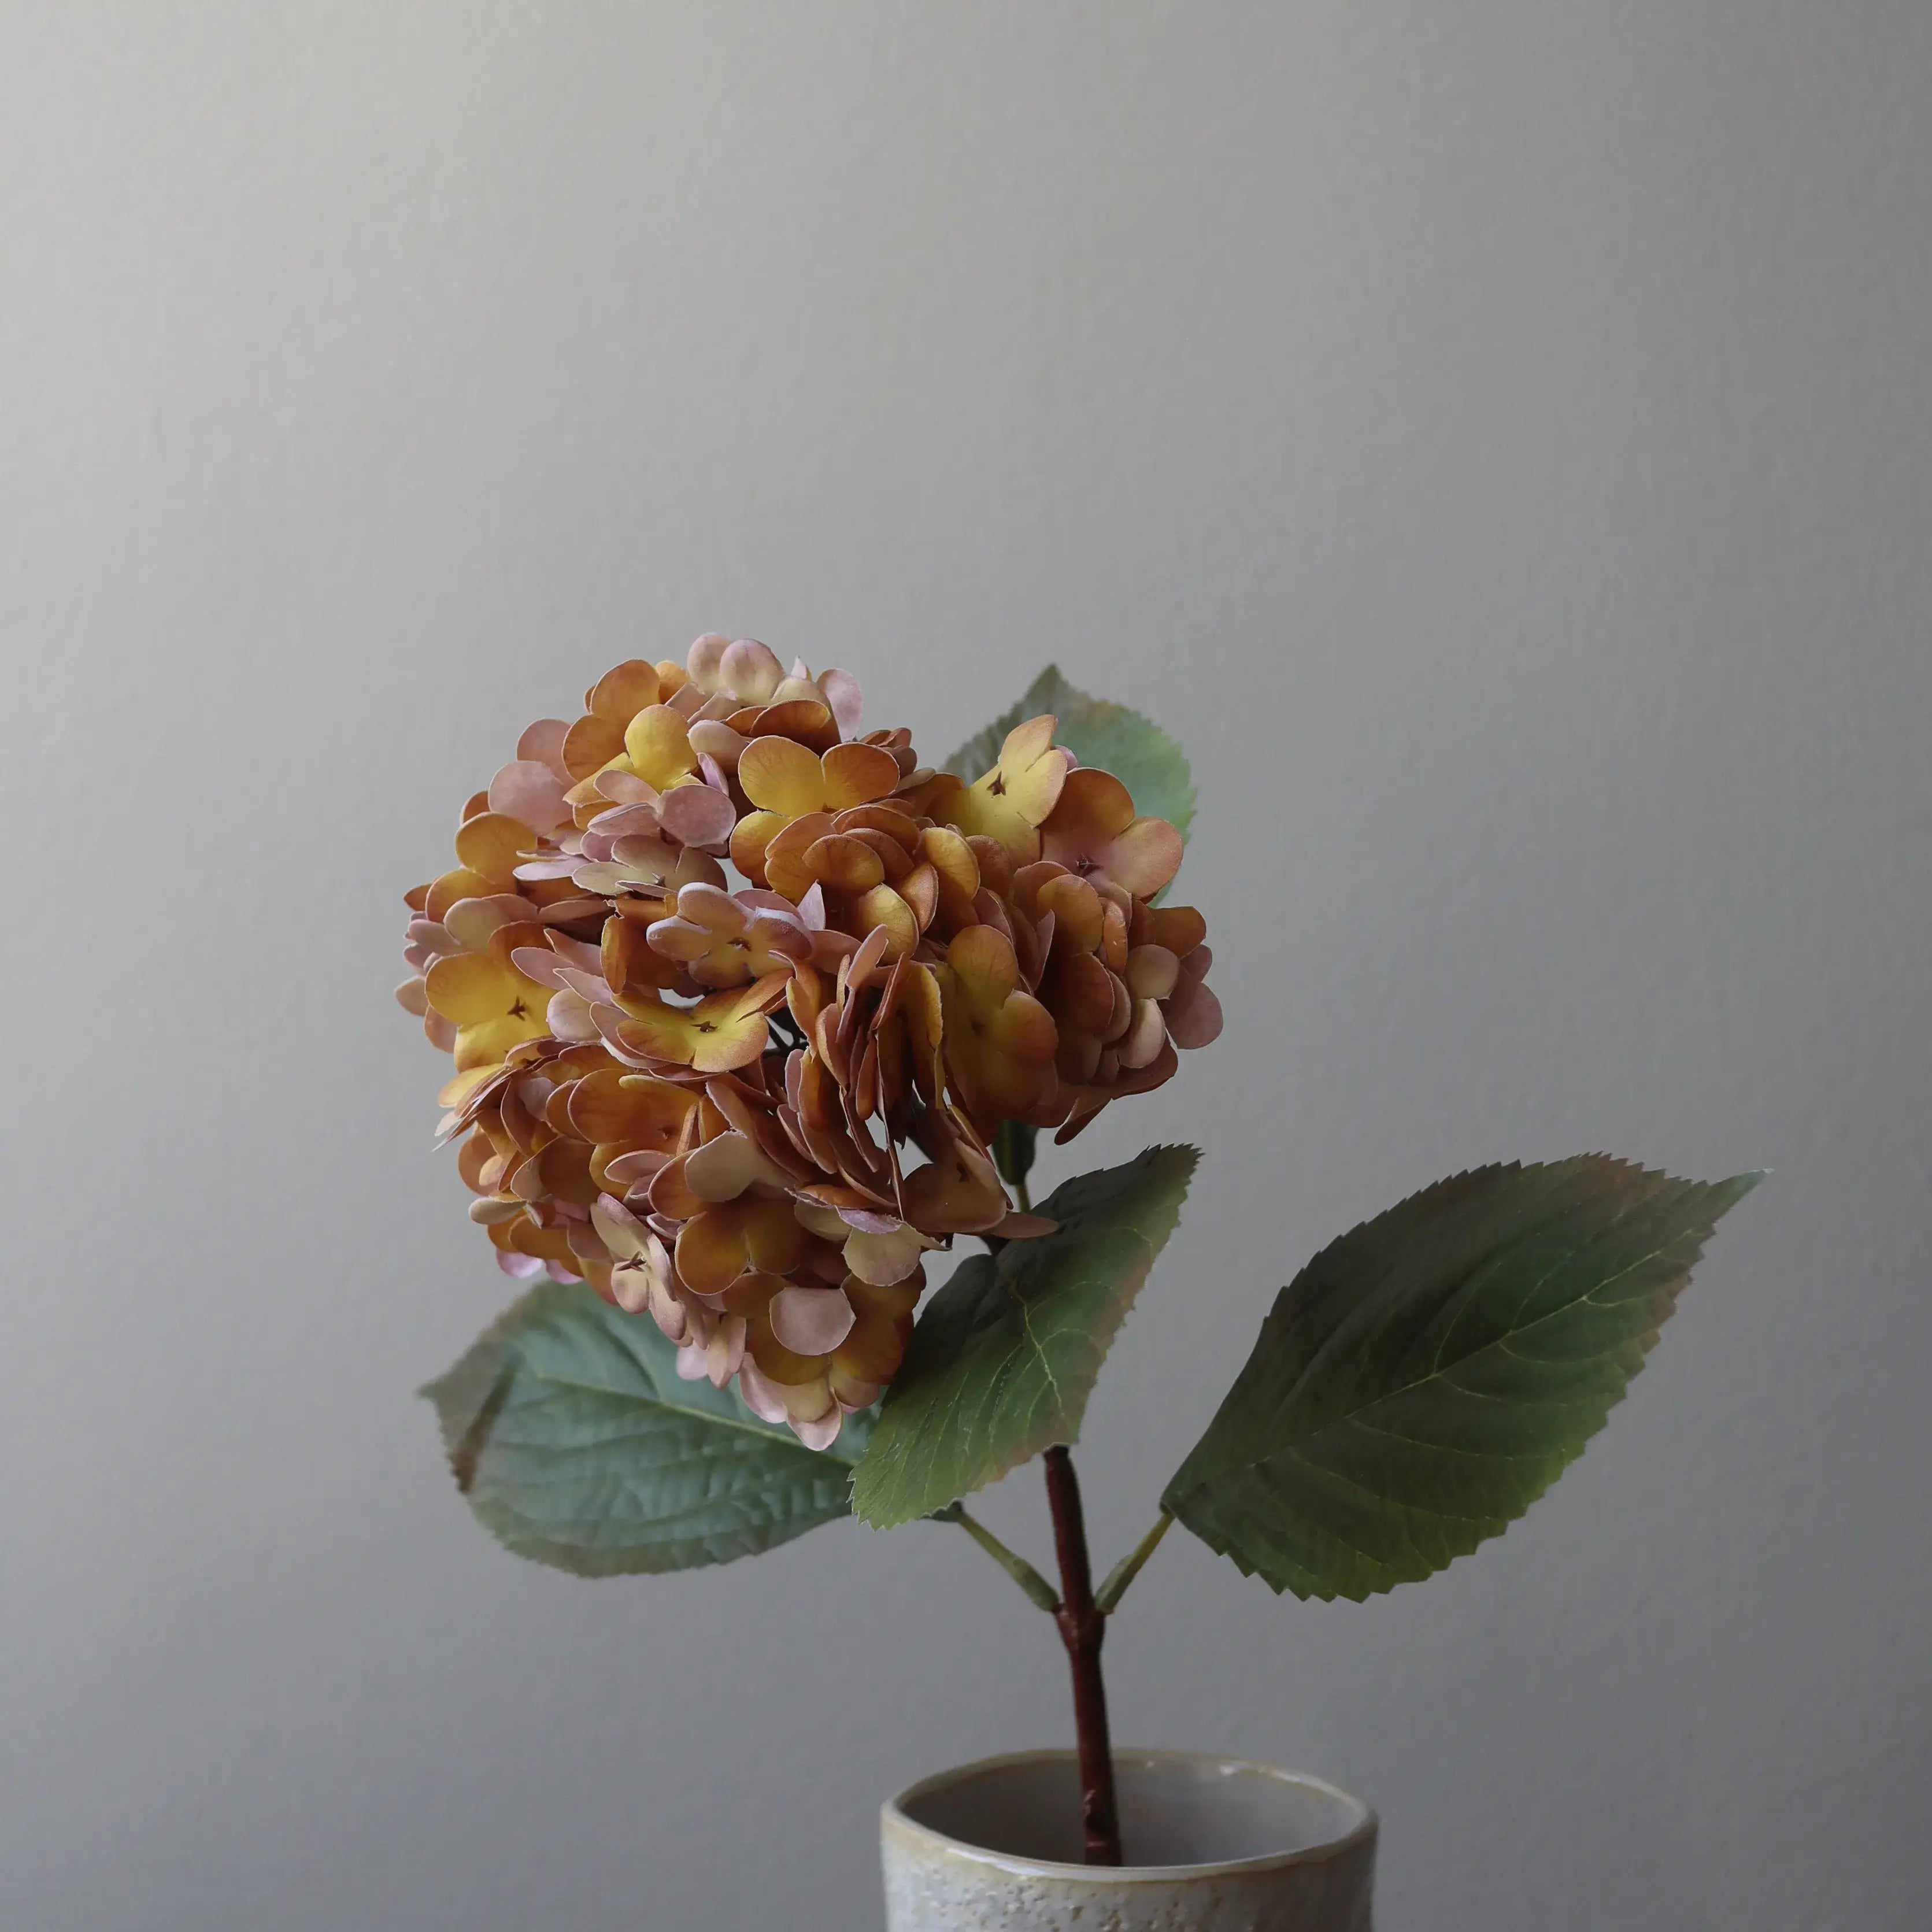 Artificial Hydrangea Flower from Botané